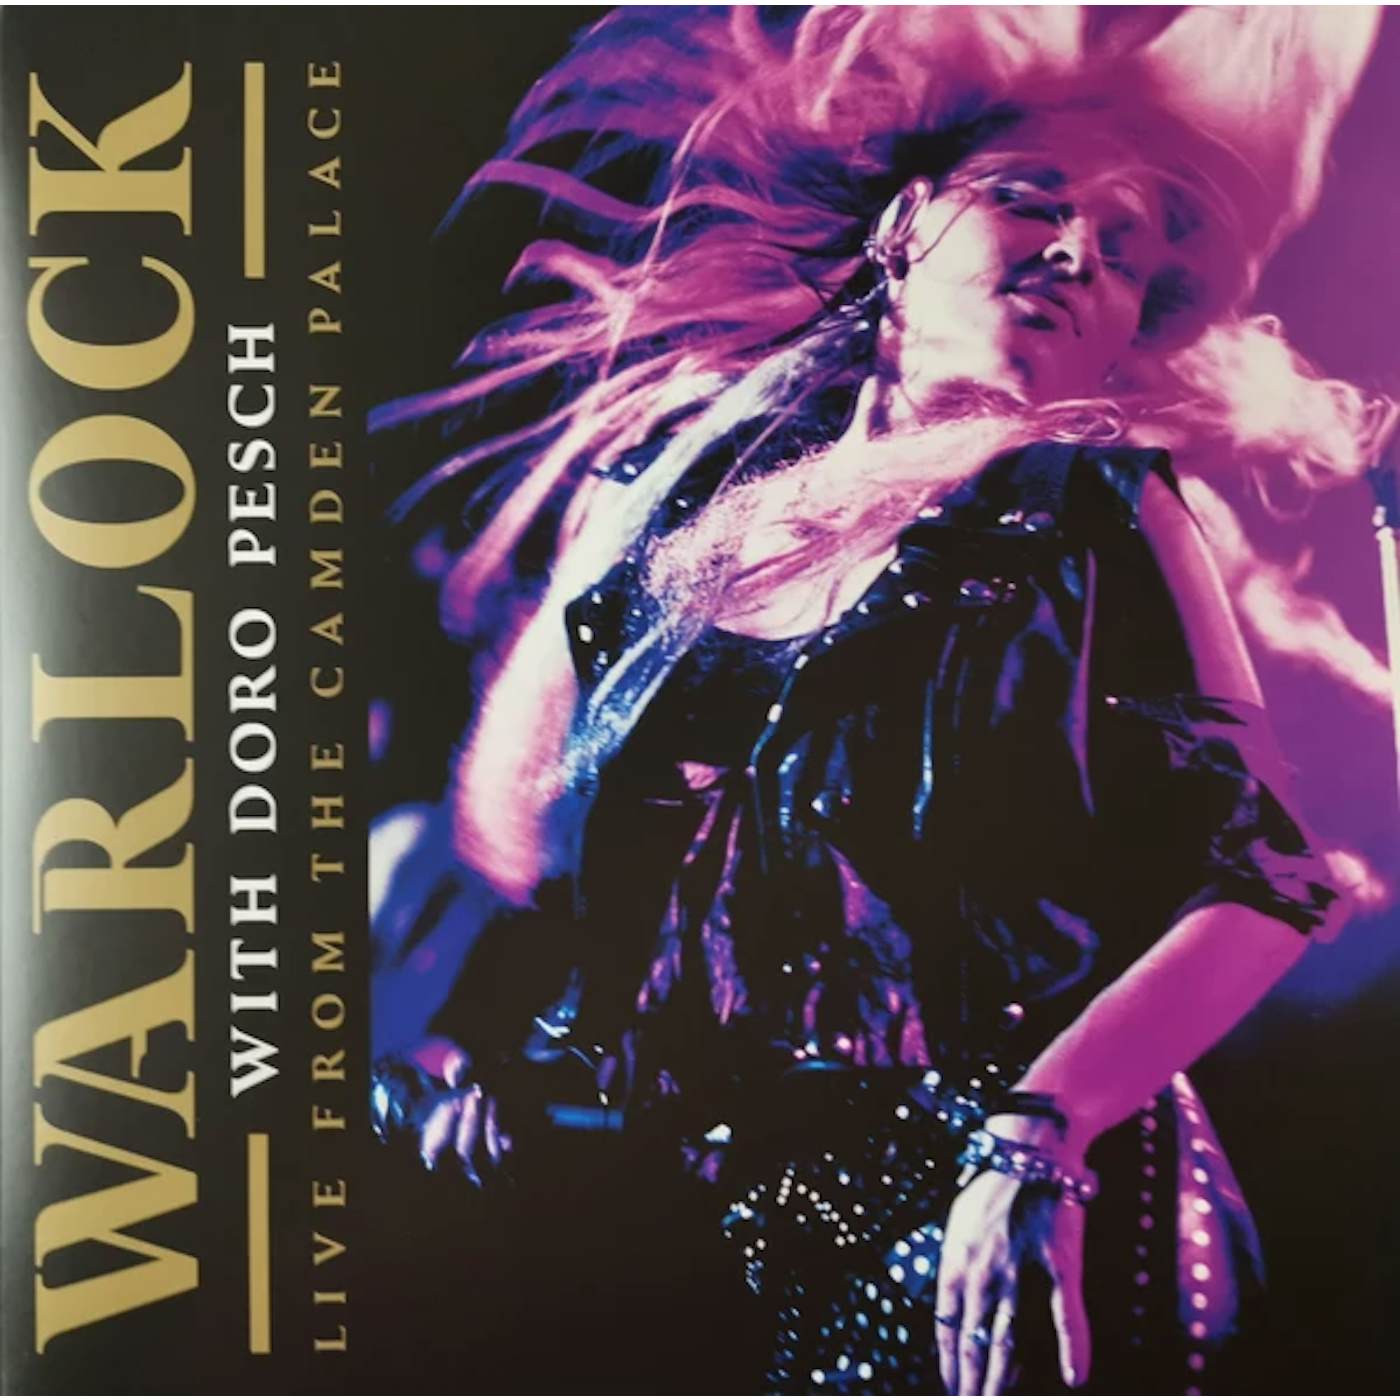 Warlock Live from camden palace   lp Vinyl Record